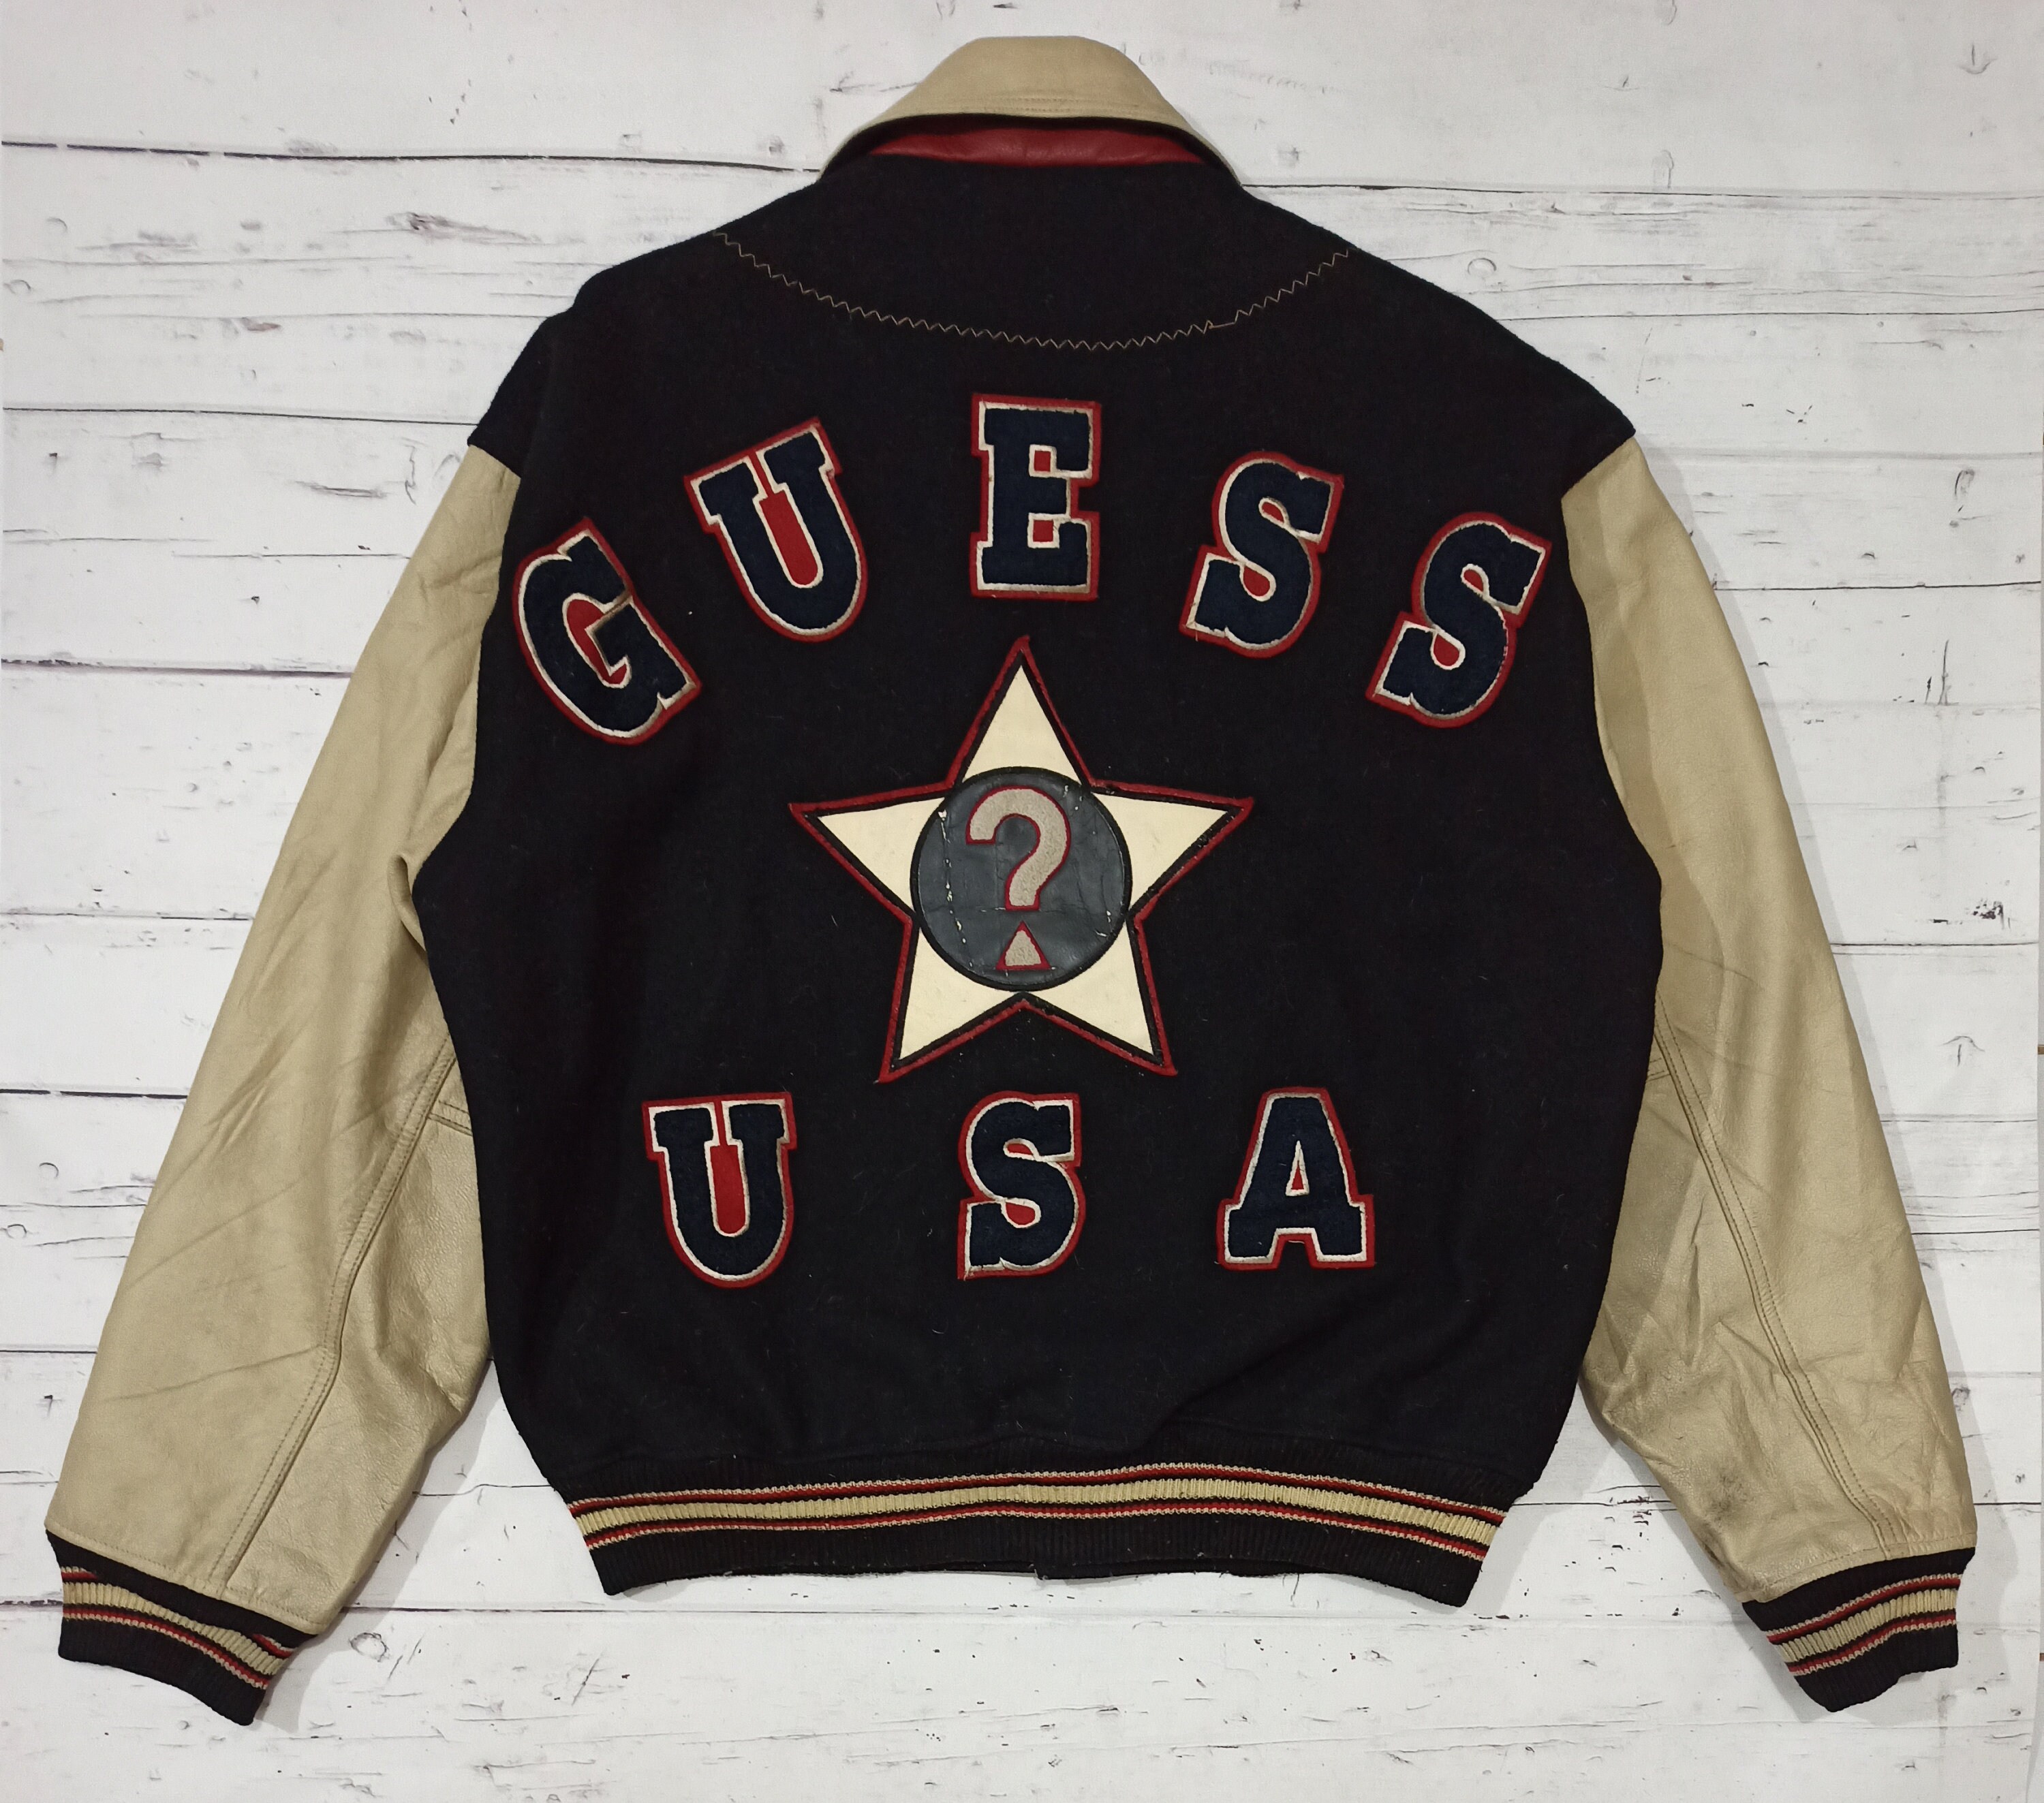 Vintage Guess Varsity Jacket | sites.unimi.it